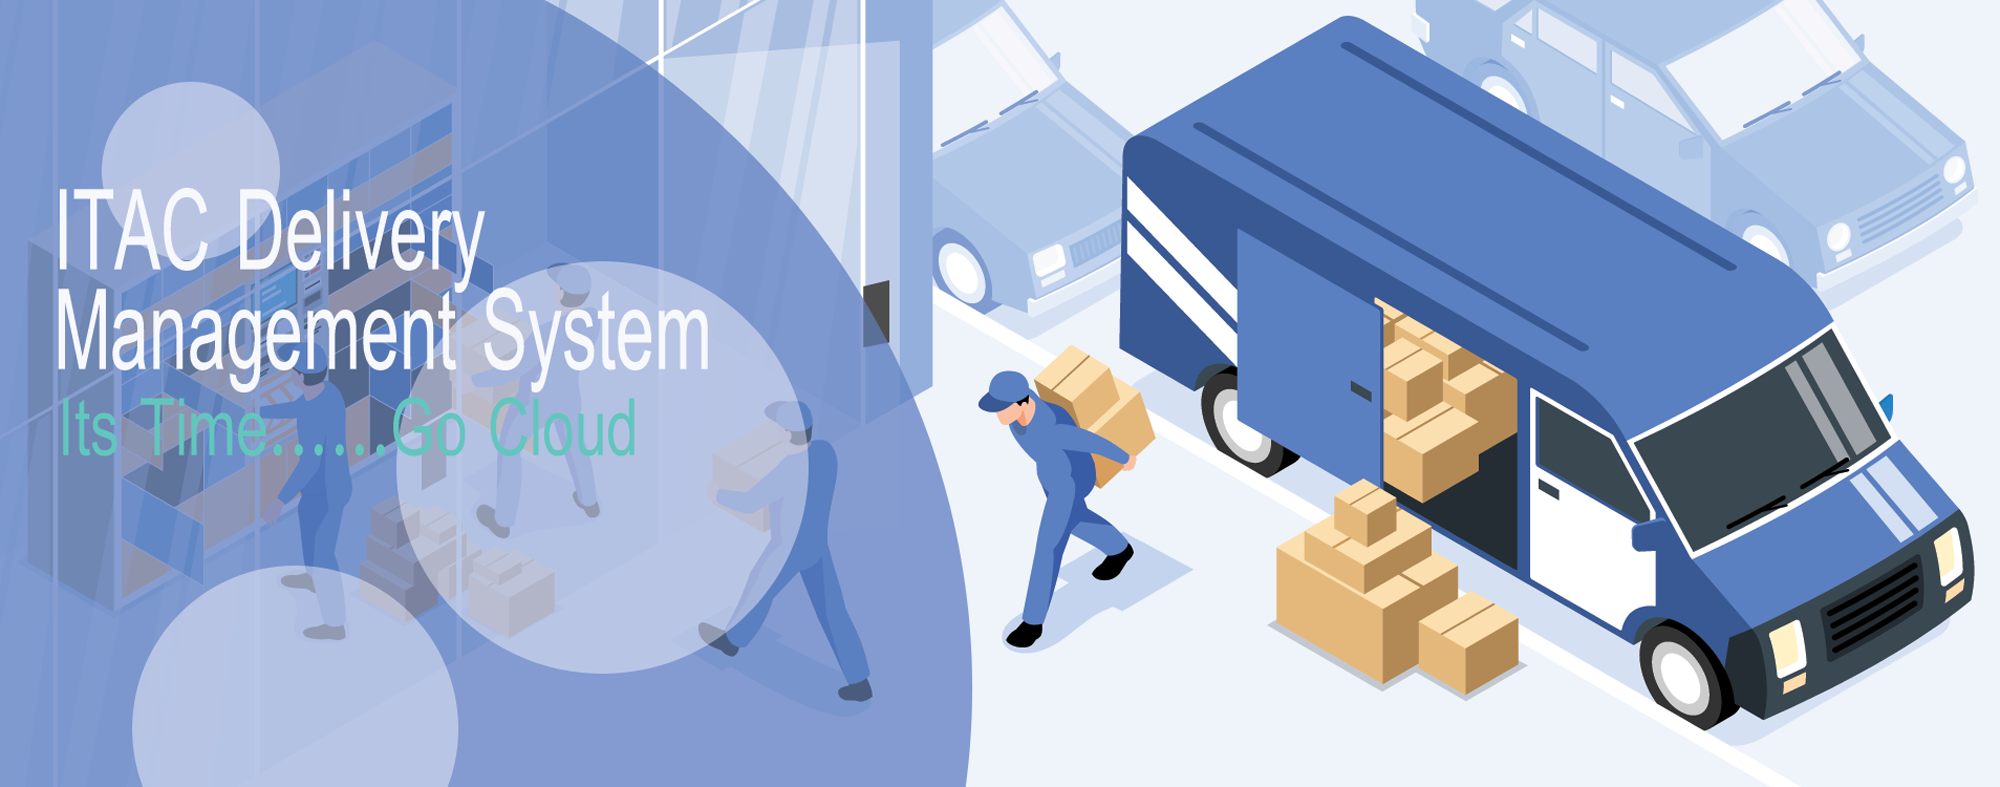 ITAC Delivery Management System